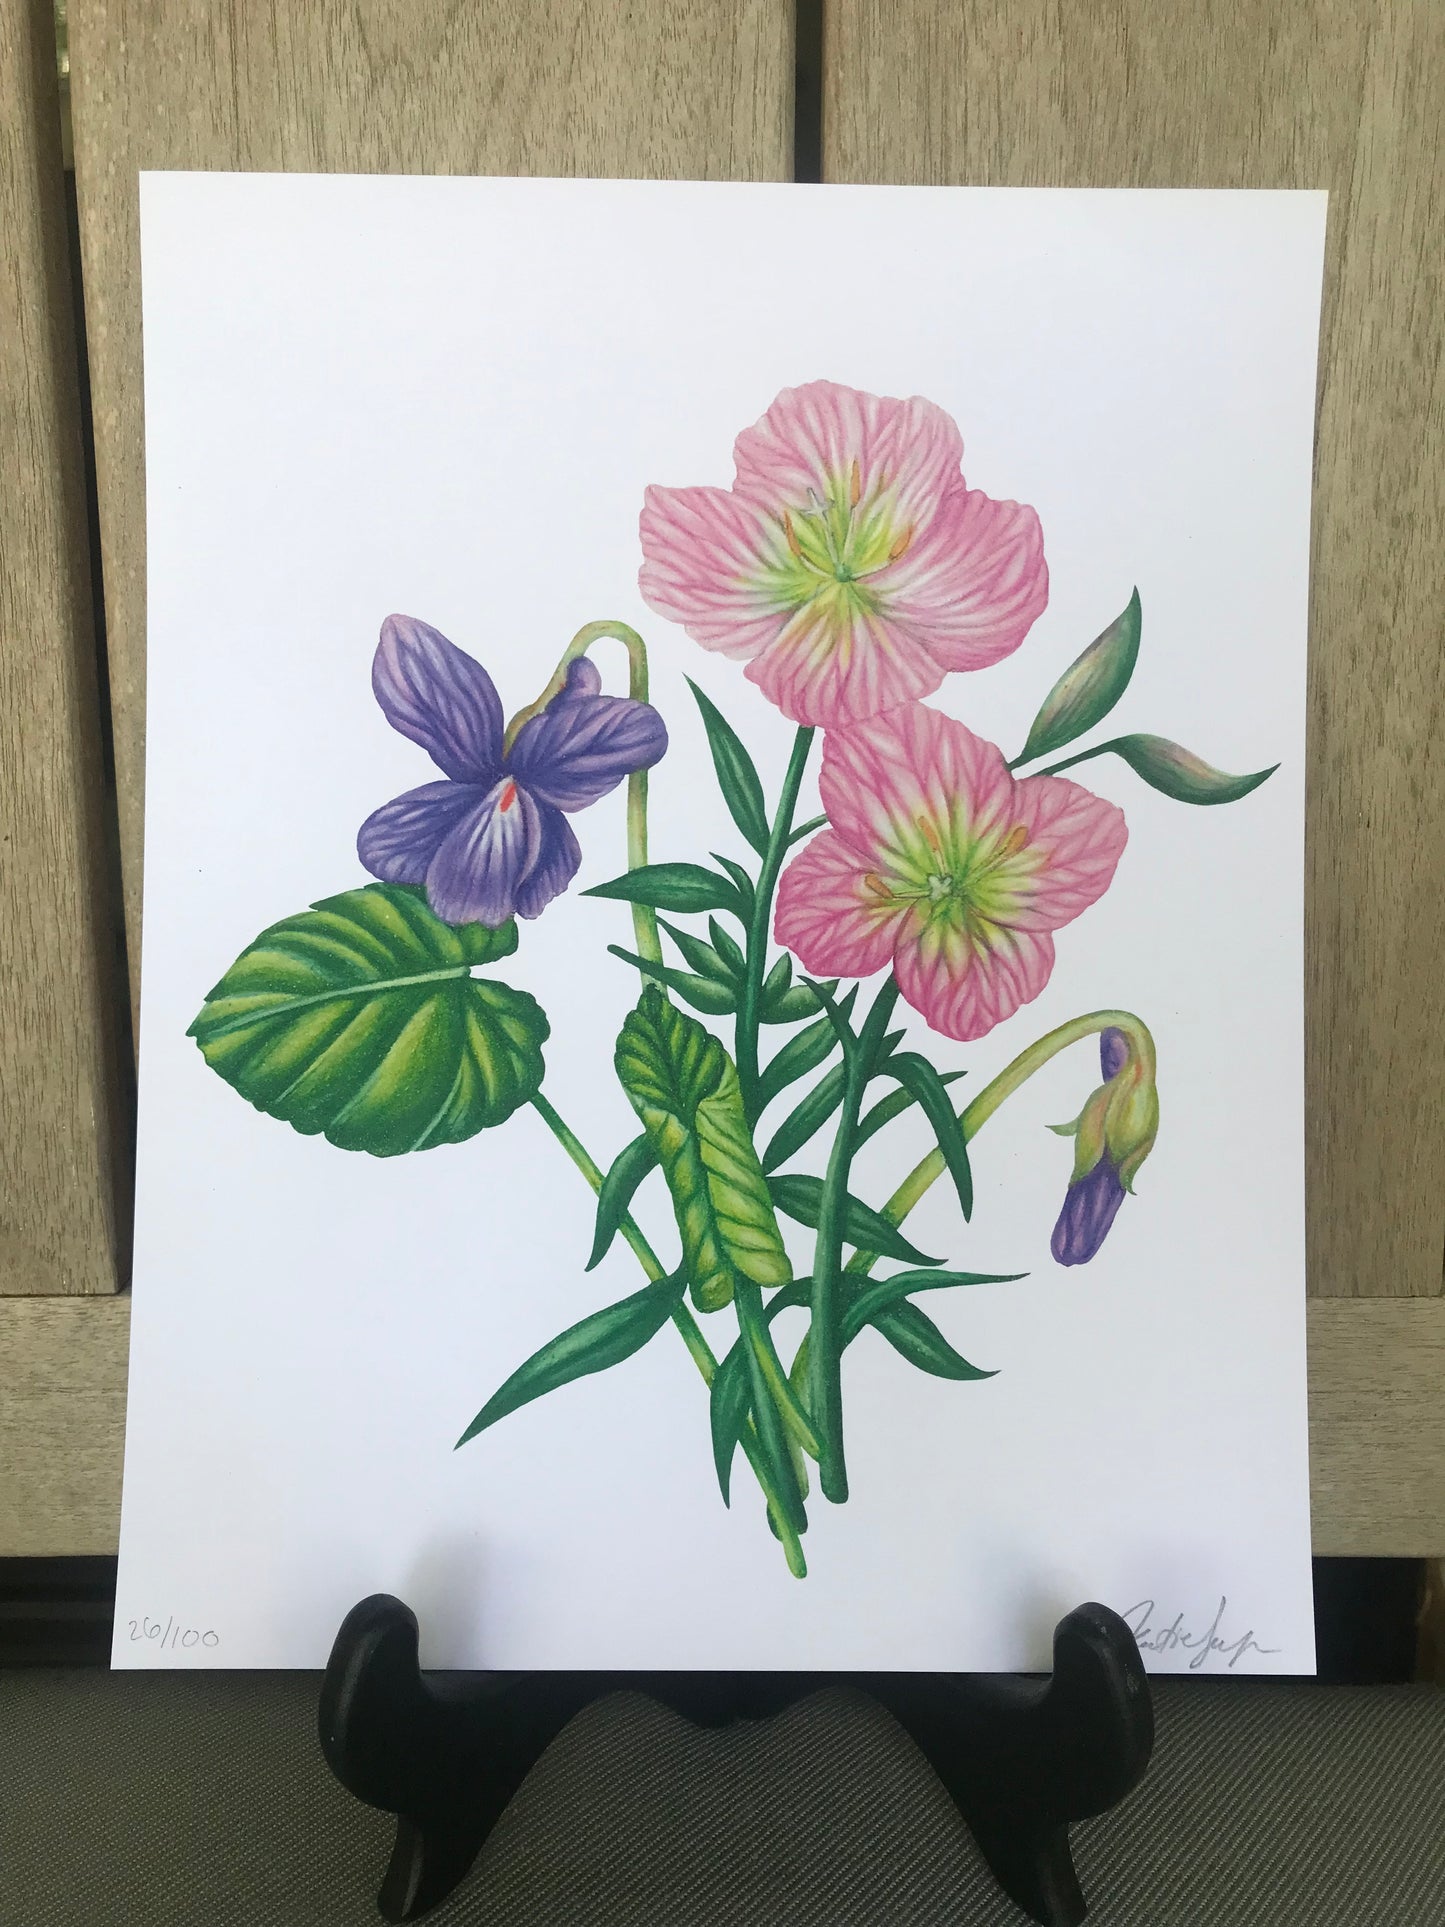 February Birth Flowers Botanical Illustration, Primroses and Violets